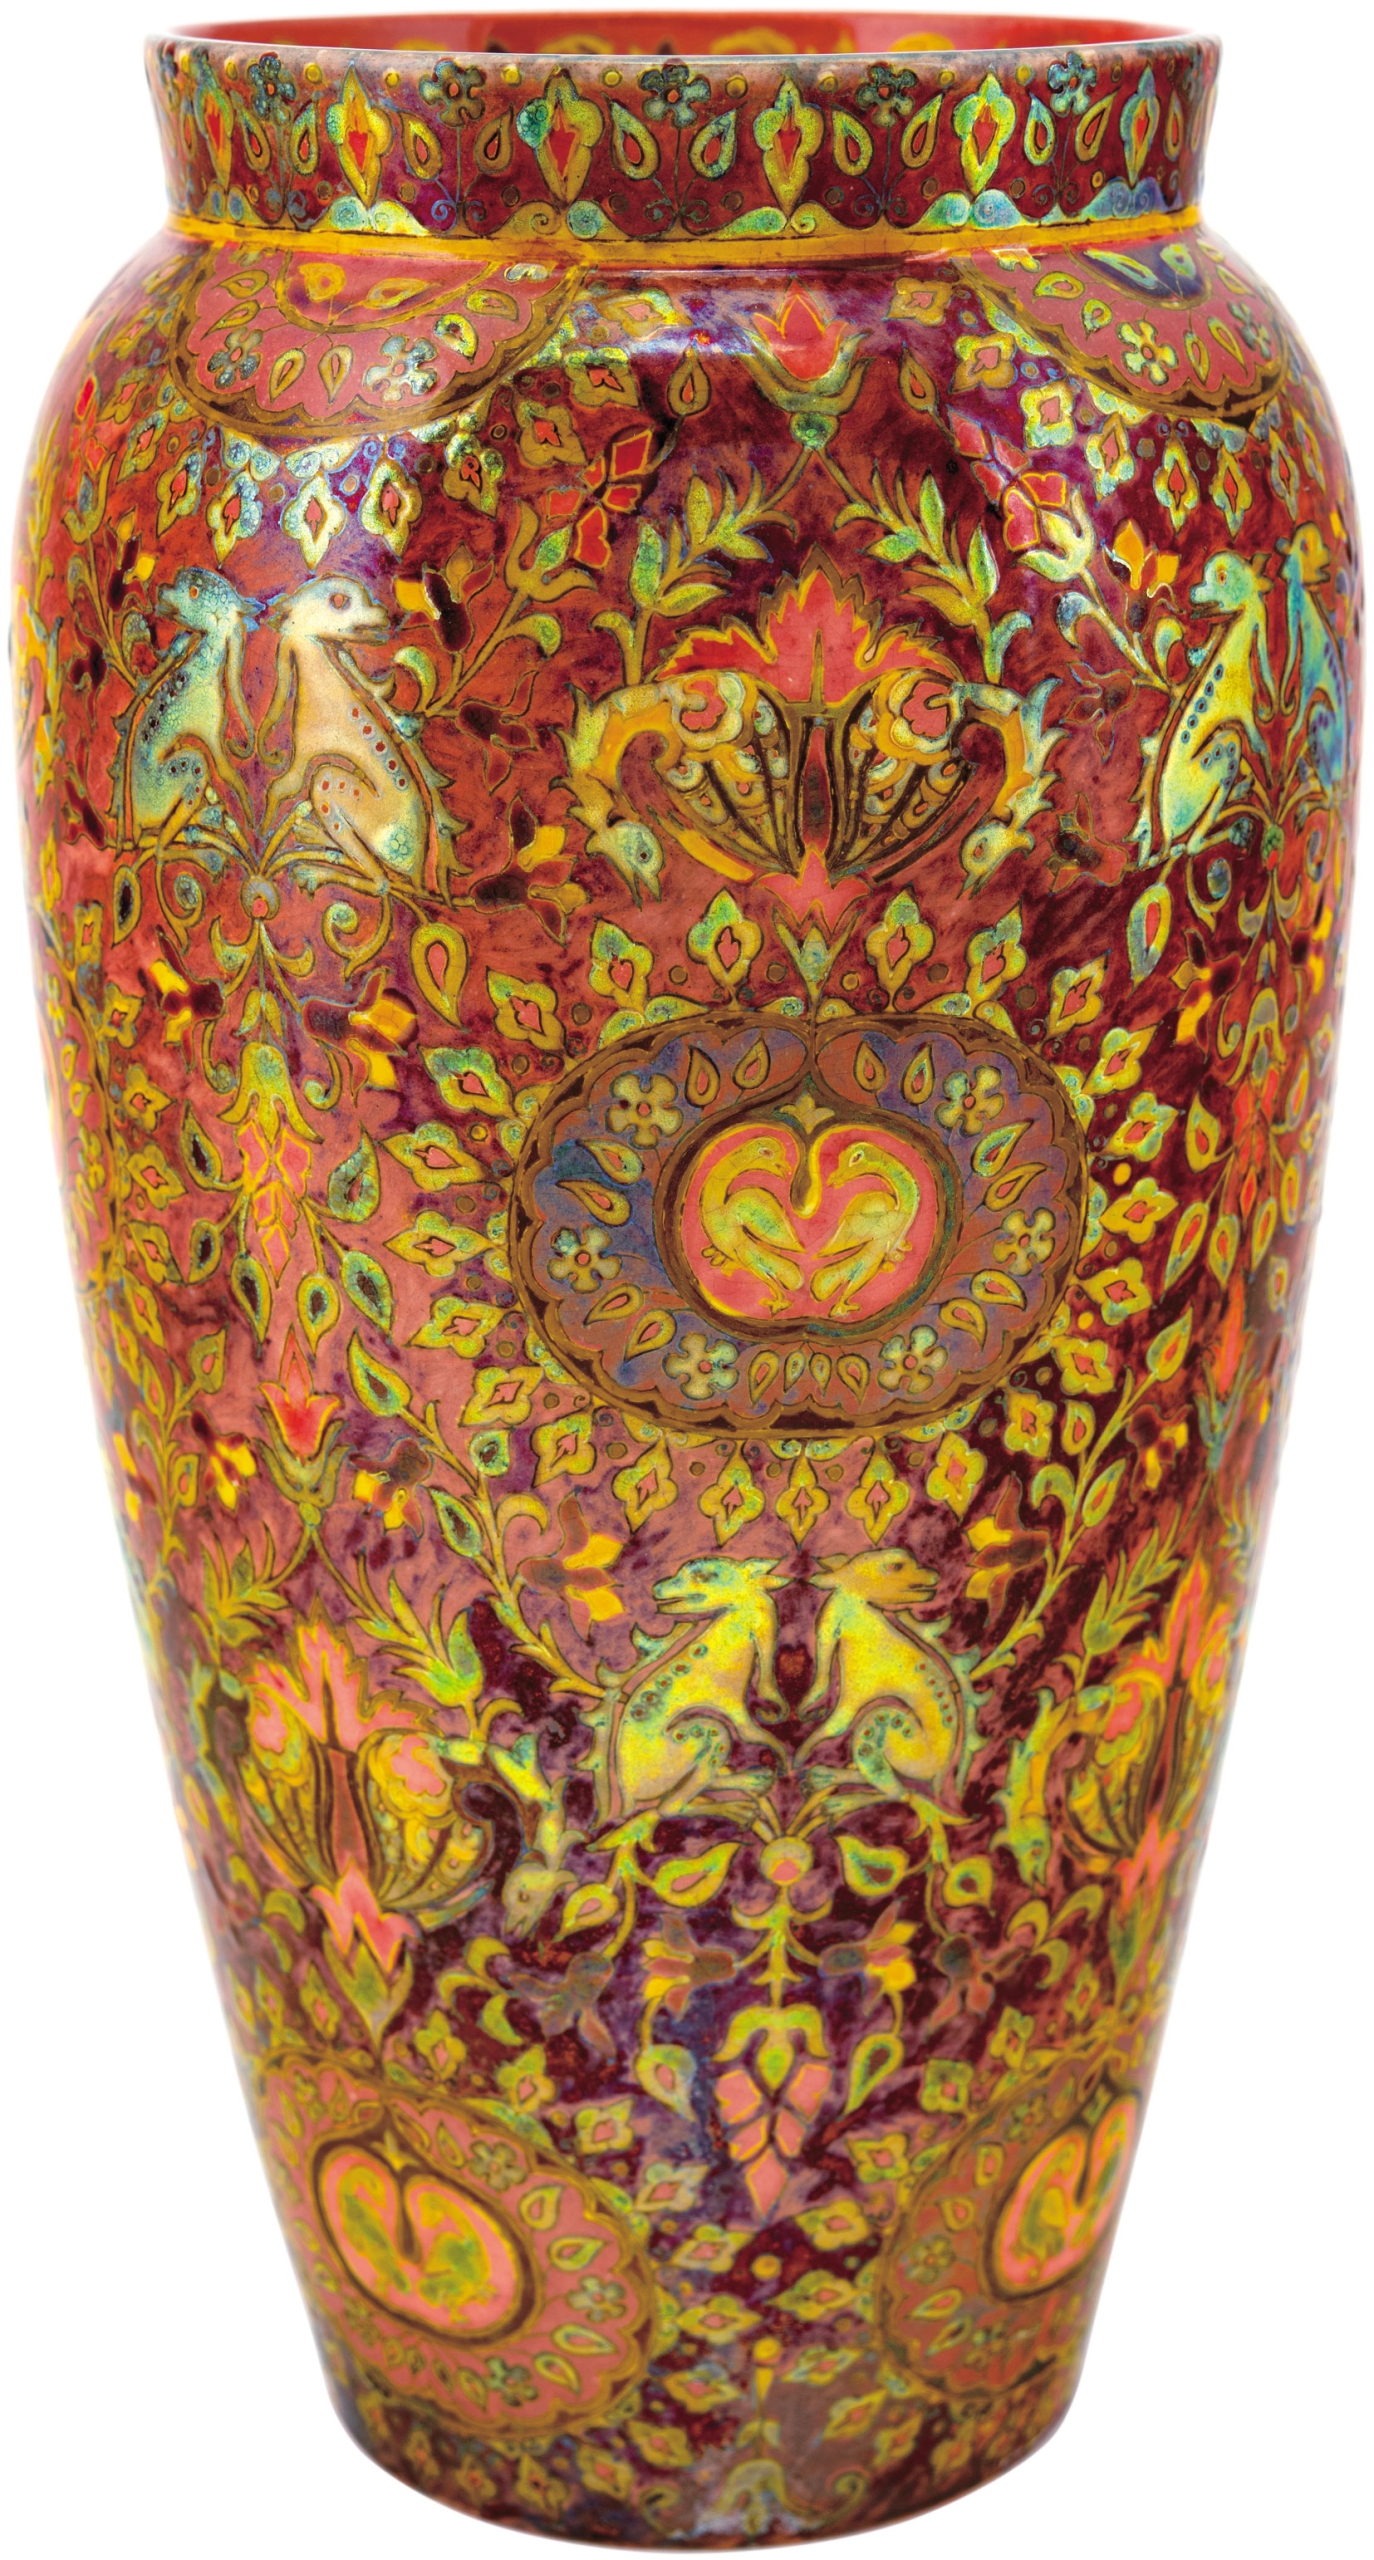 Zsolnay Silk Fabric Patterned Vase, around 1920